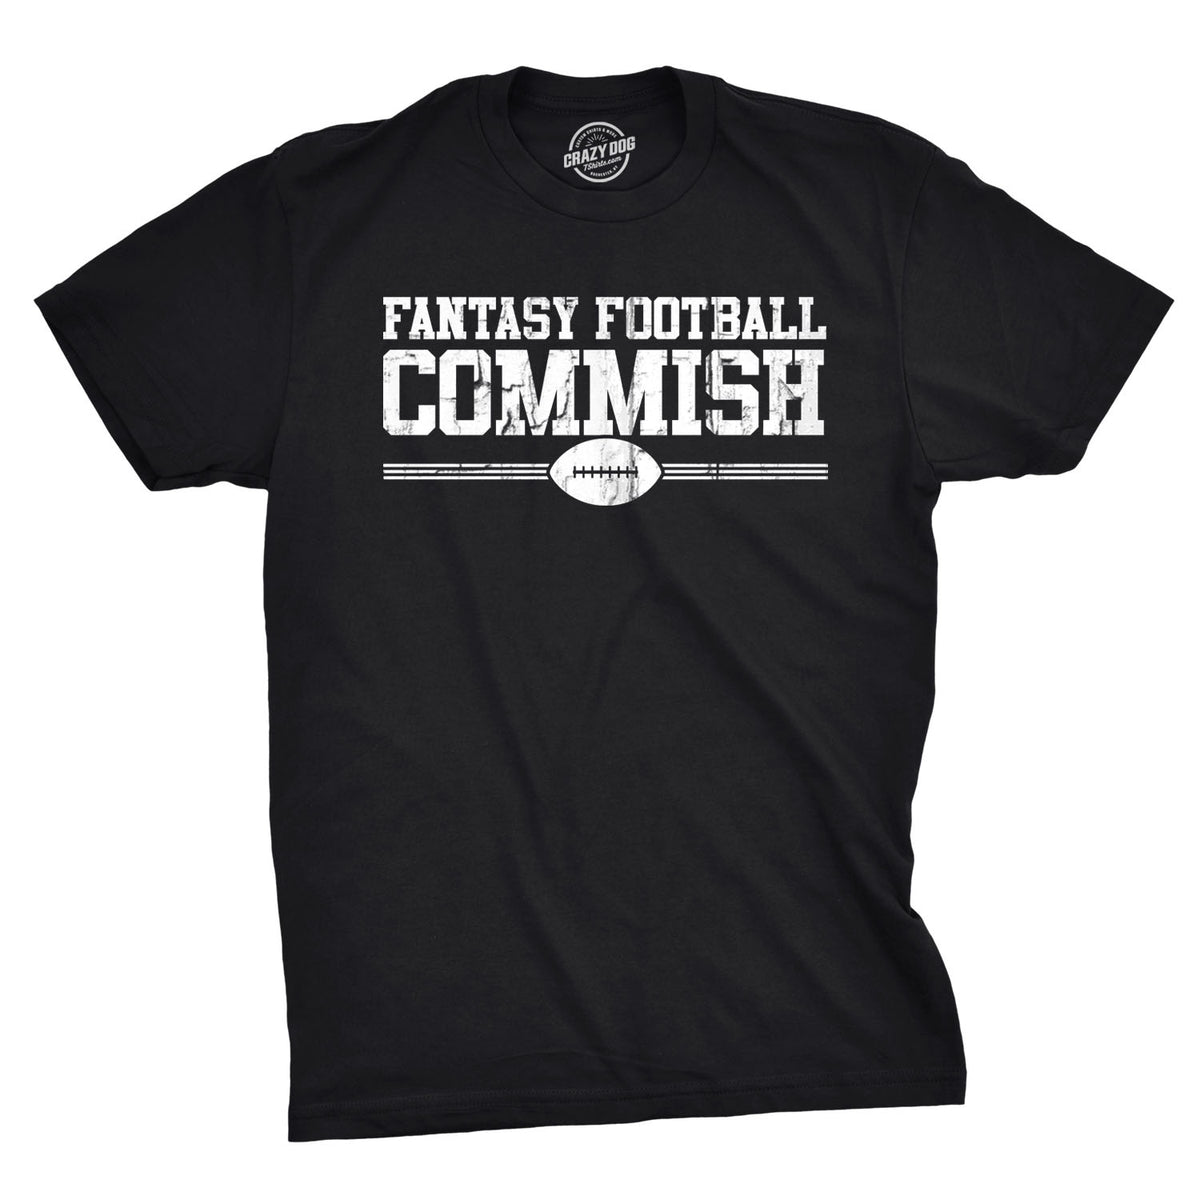 Funny Black Fantasy Football Commish Mens T Shirt Nerdy Football Tee